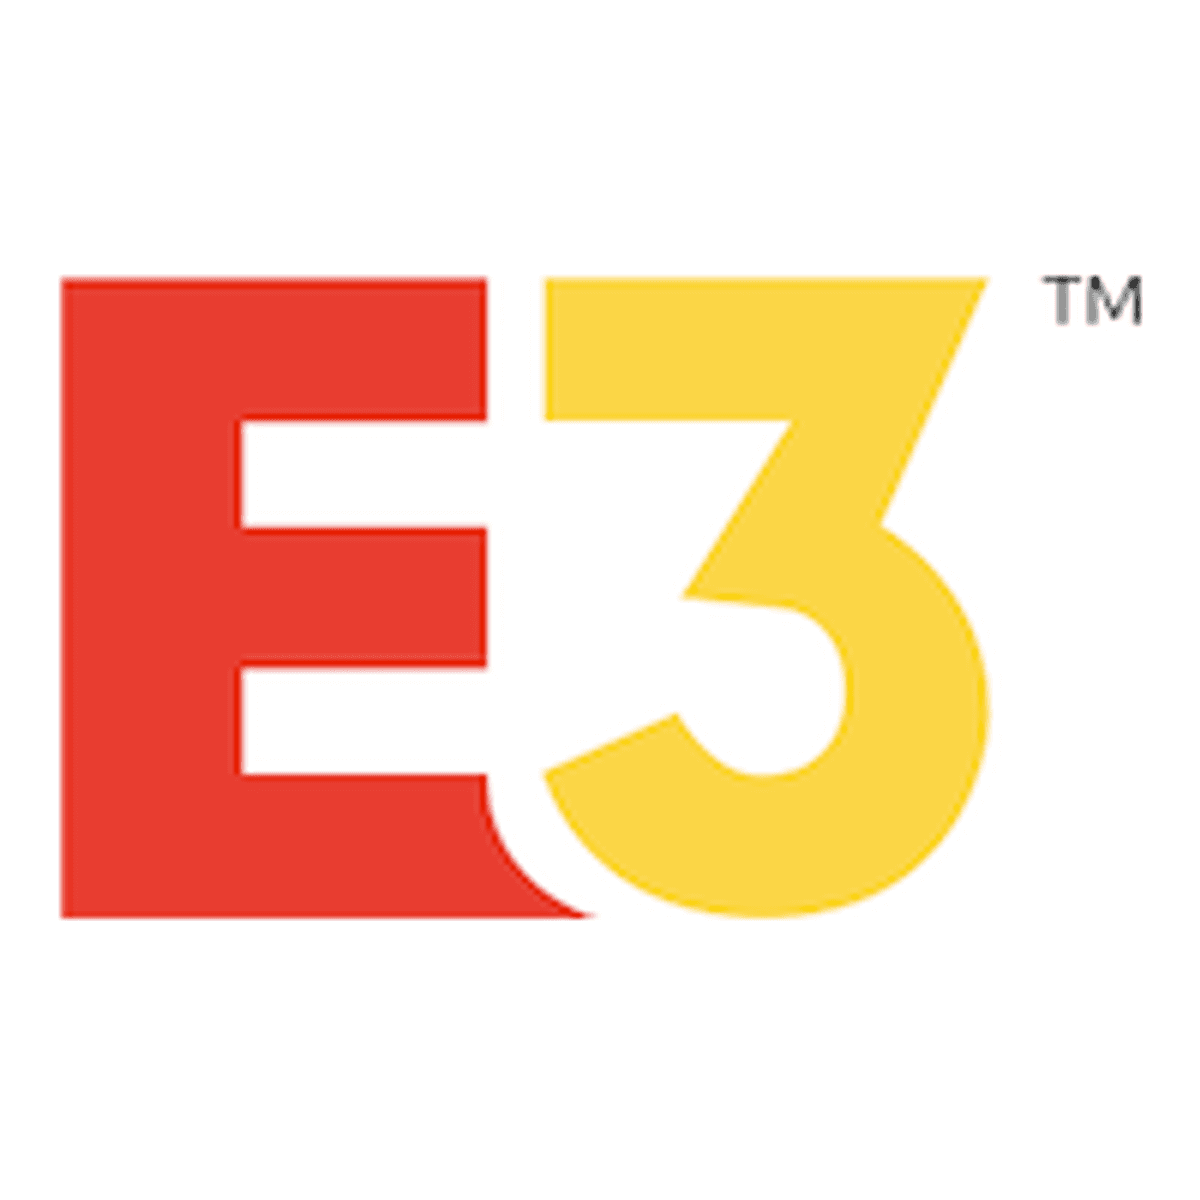 Gamebeurs E3 afgelast image